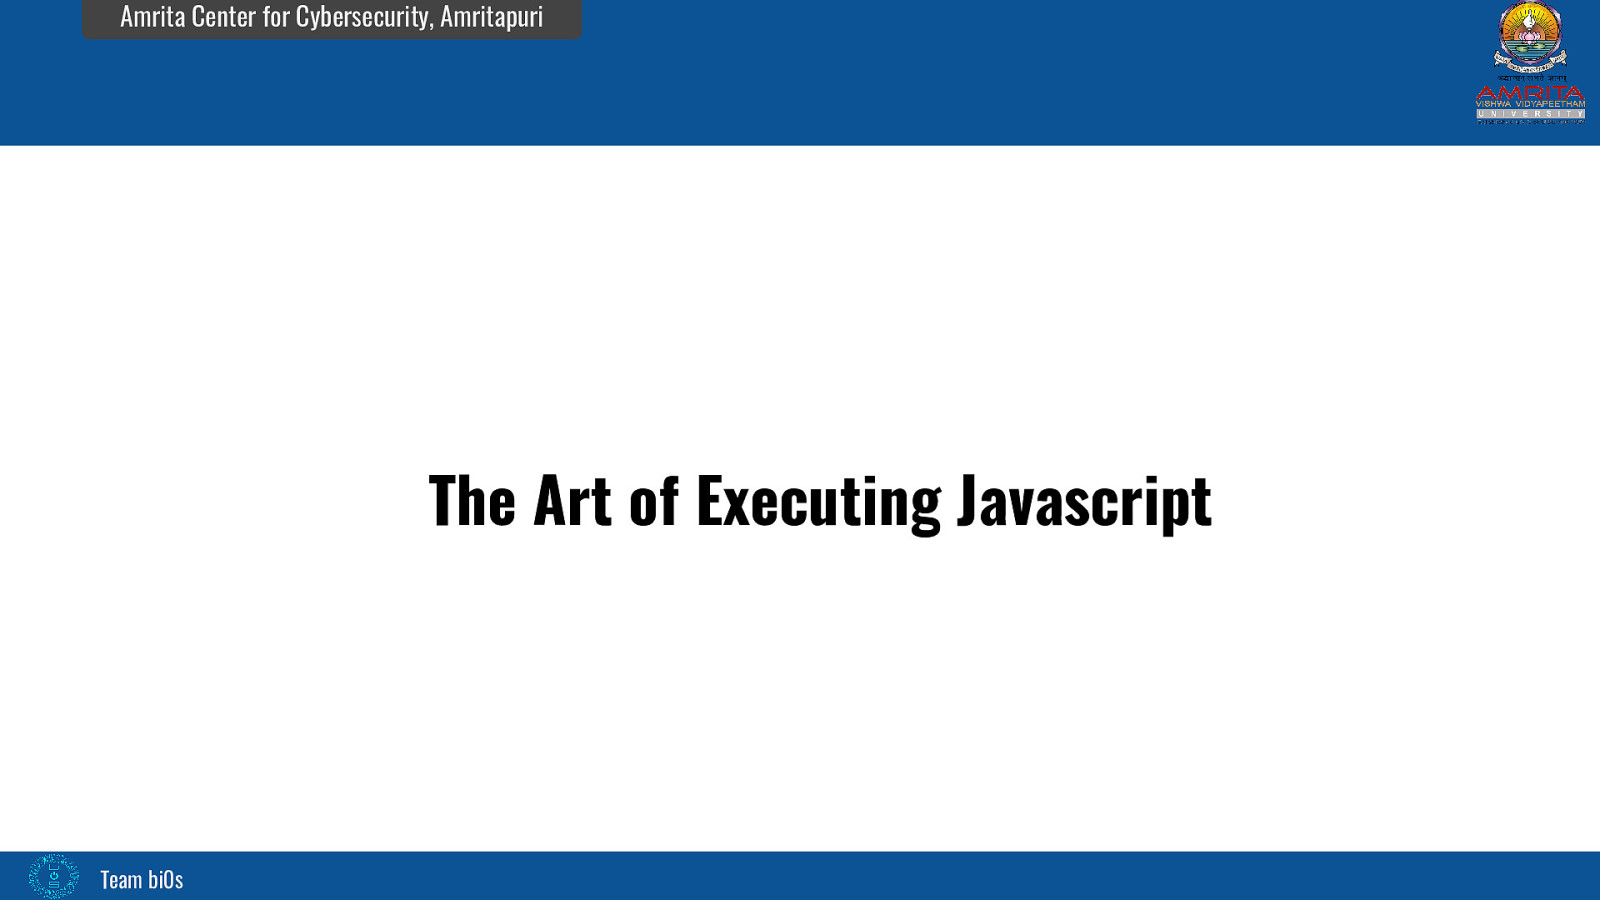 The Art of Executing Javascript